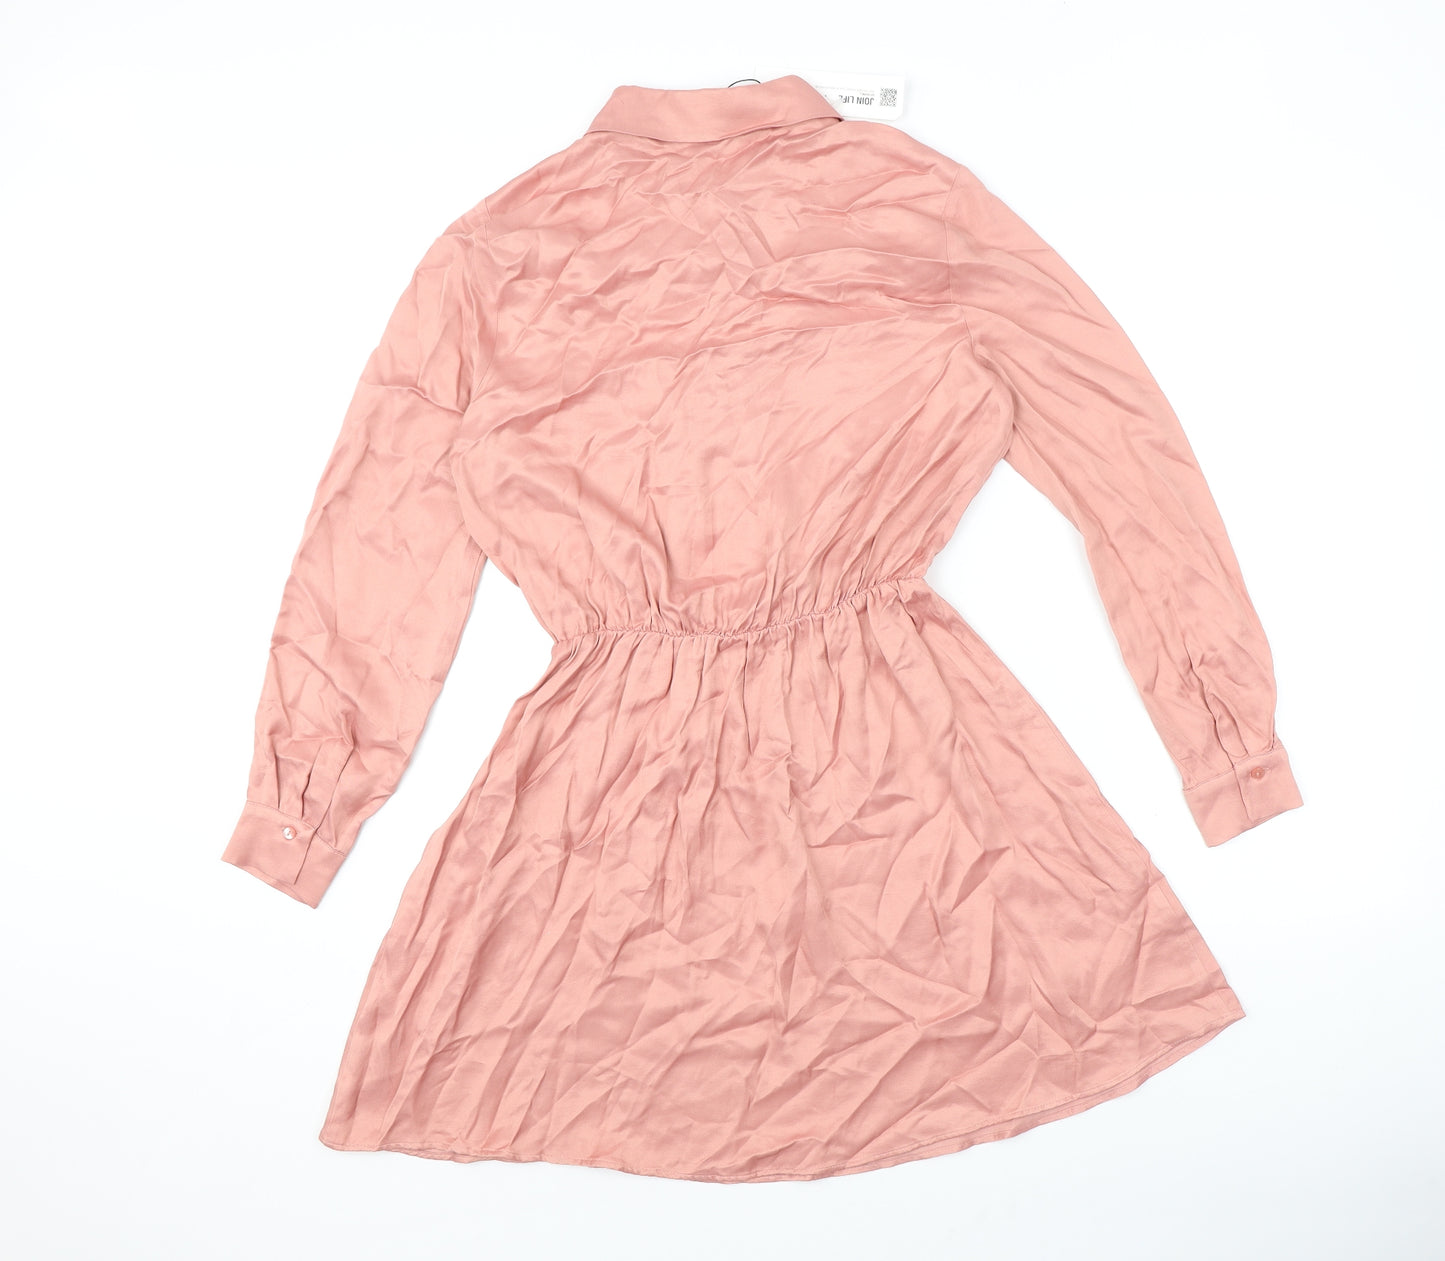 Zara Womens Pink Viscose Shirt Dress Size S Collared Button